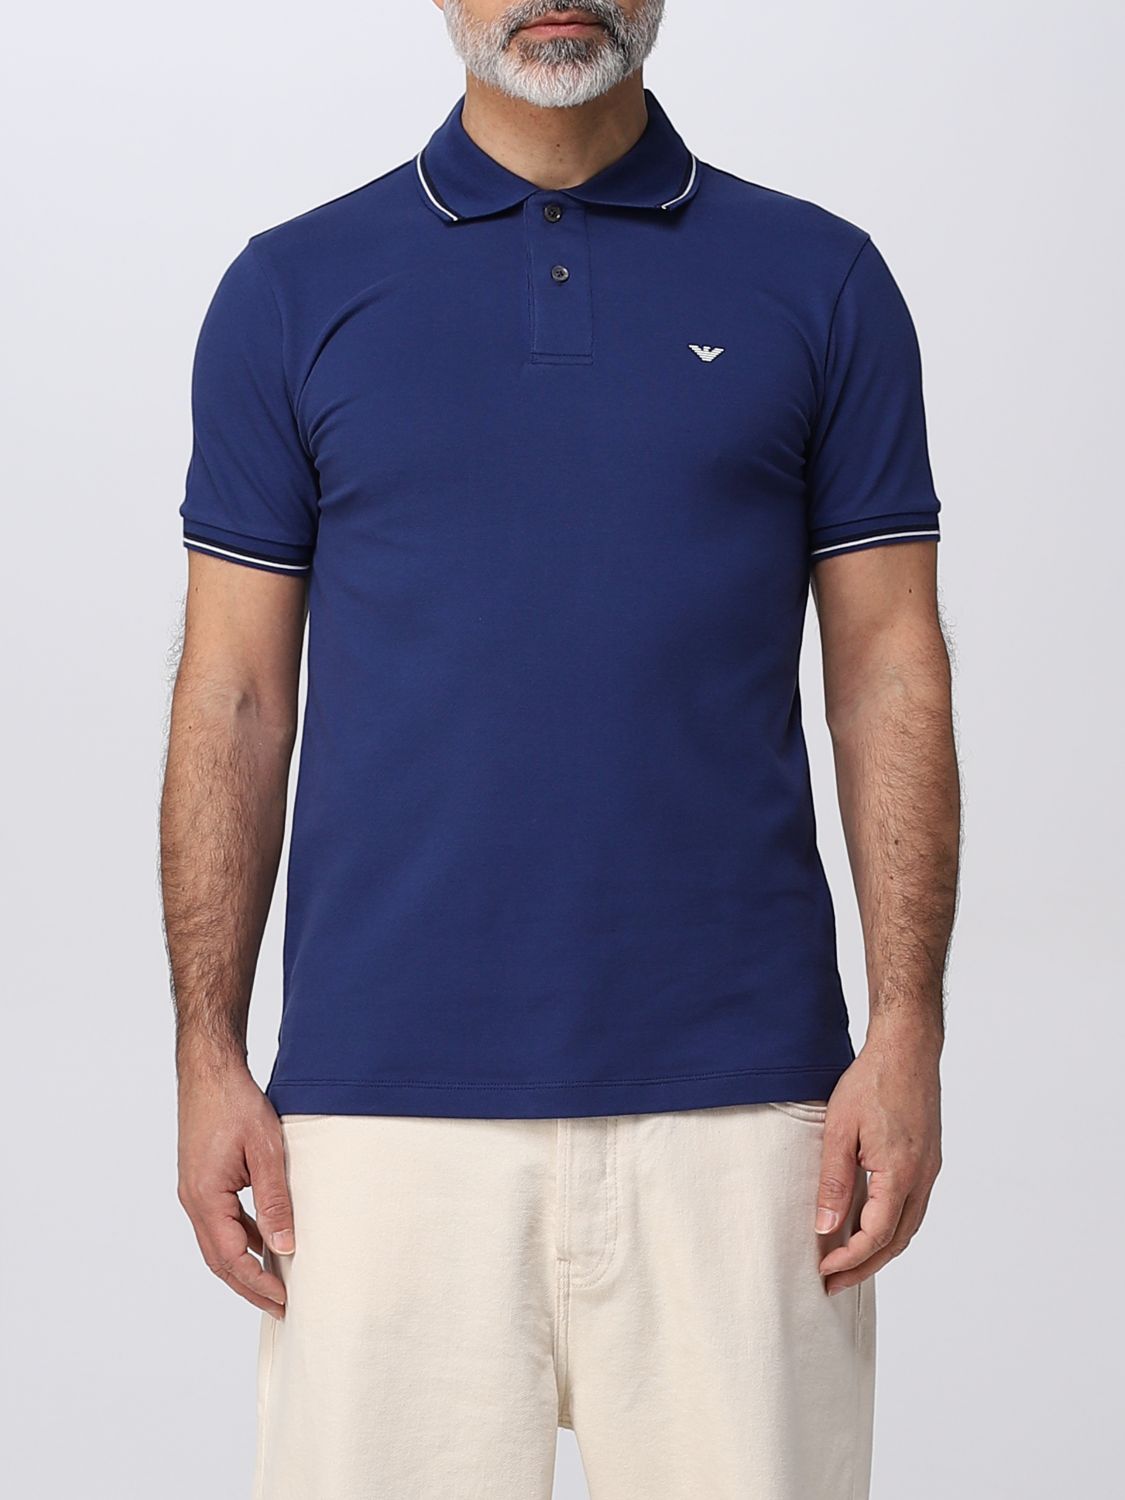 EMPORIO ARMANI: polo shirt for man - Blue | Emporio Armani polo shirt  8N1FB41JPTZ online on 